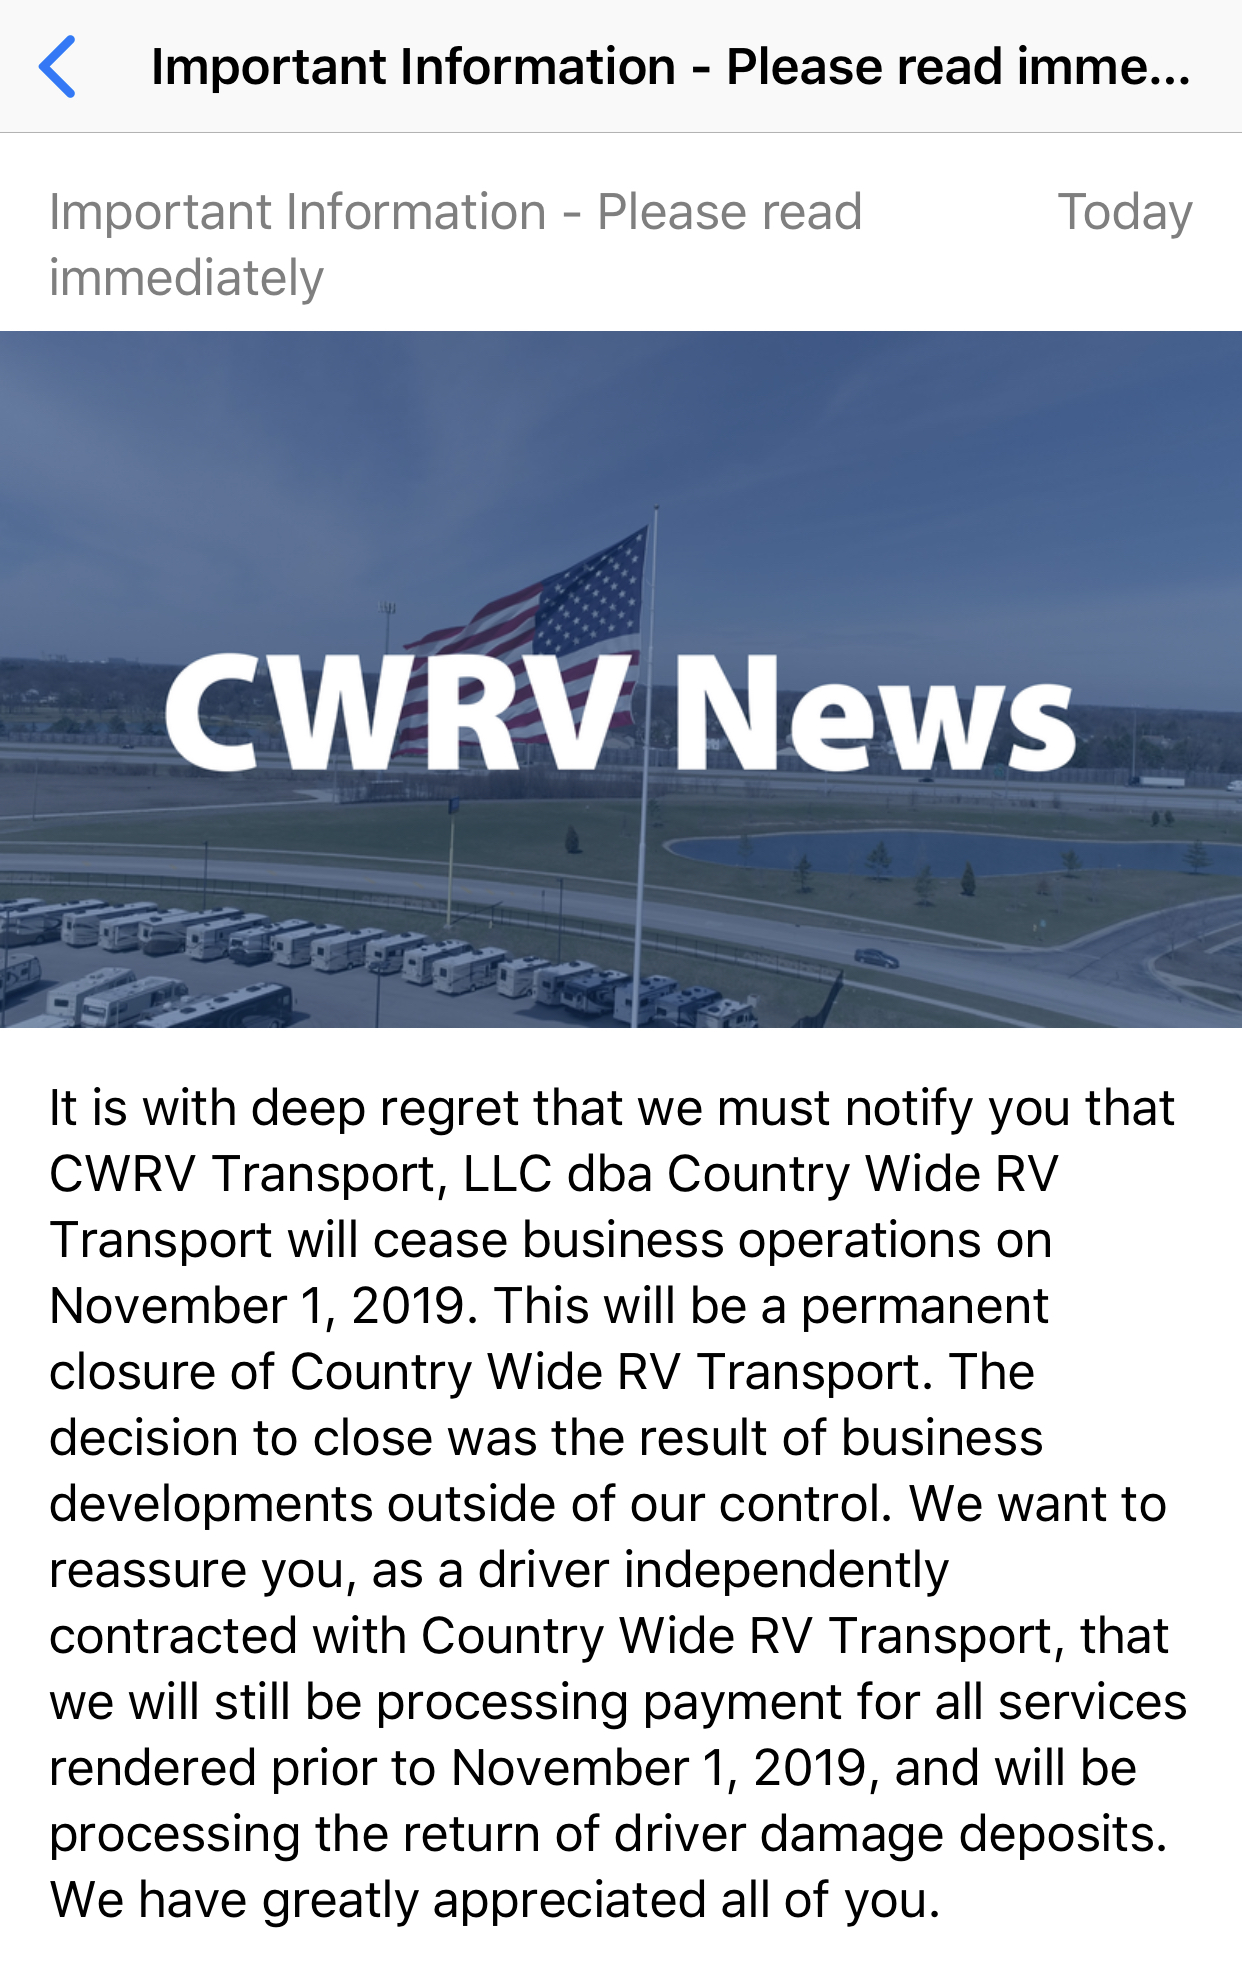 CWRV closing